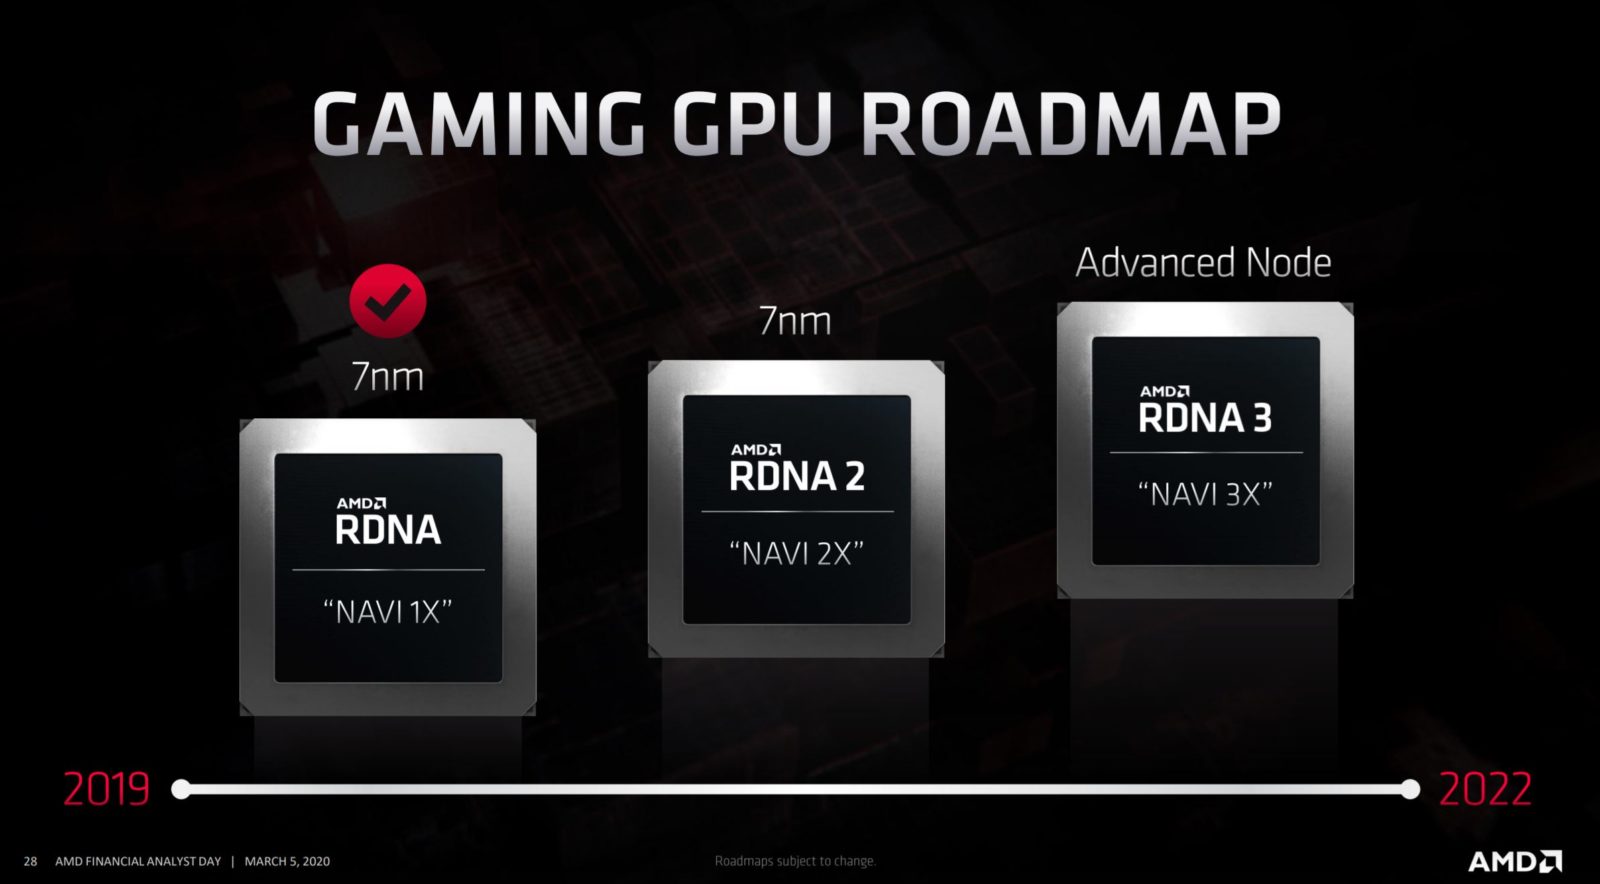 AMD-Radeon-RX-NAVI-2X-RDNA2-Roadmap-1600x884.jpg